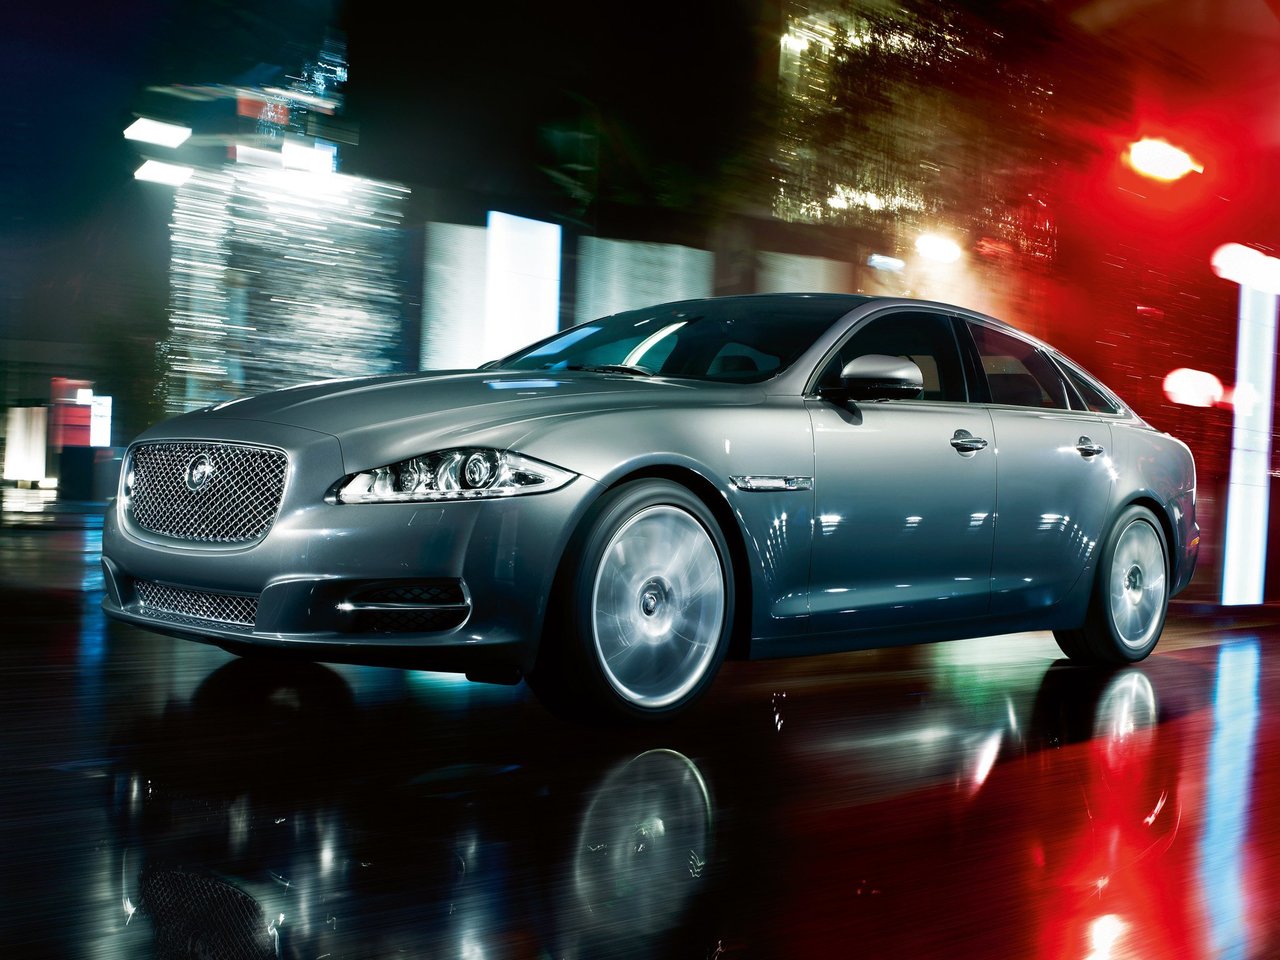 Снижаем расход Jaguar XJ на топливо, устанавливаем ГБО